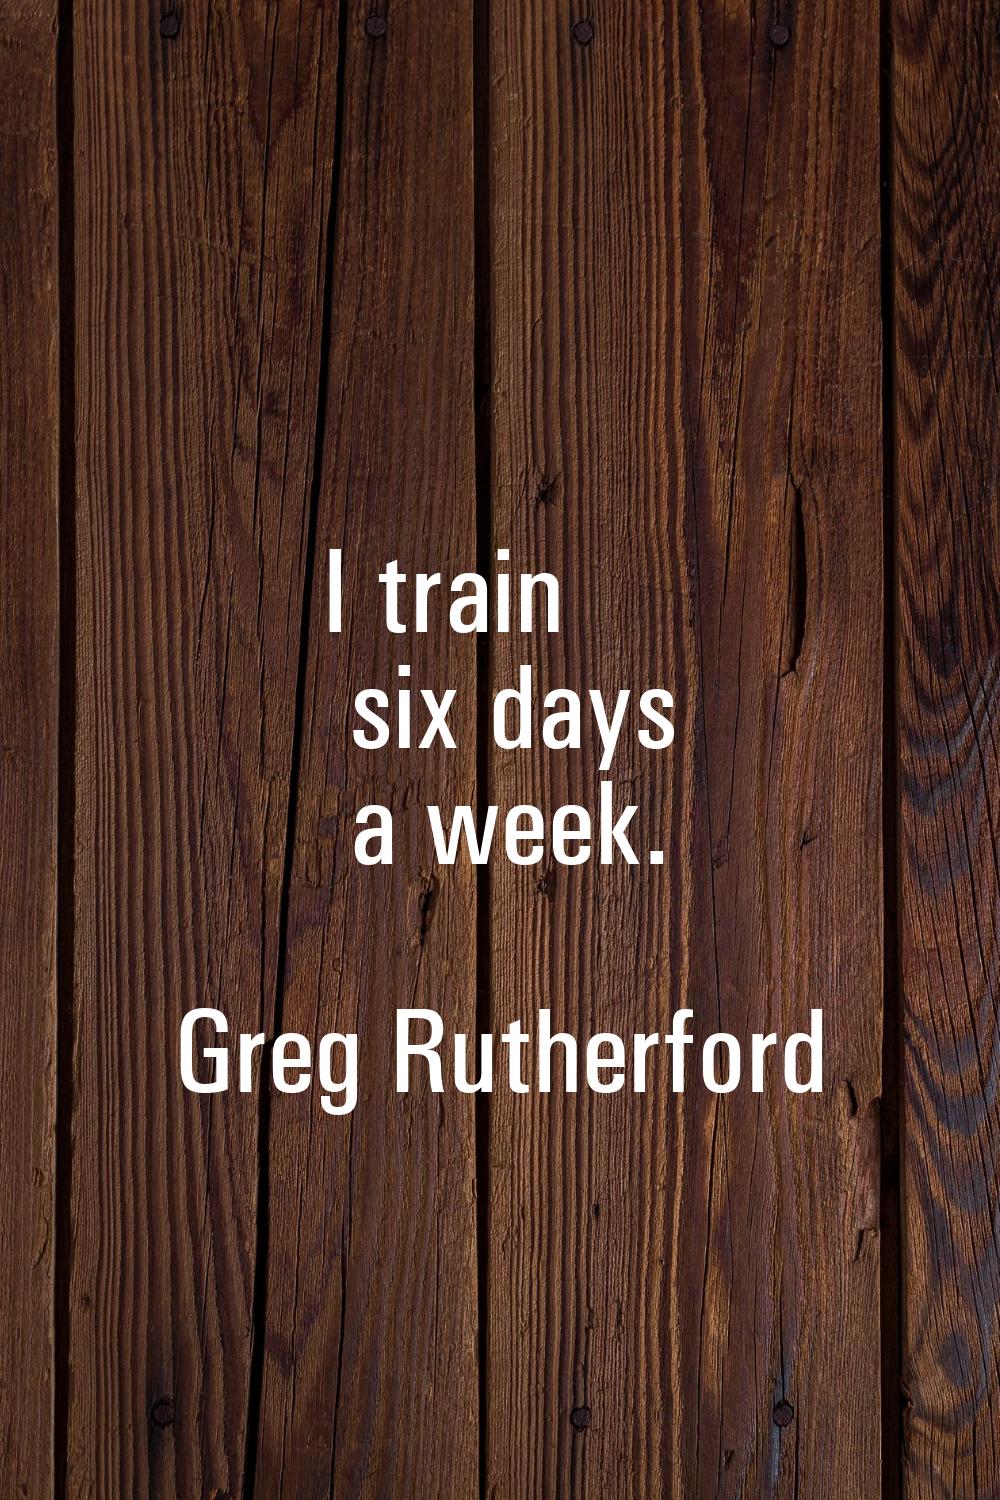 I train six days a week.